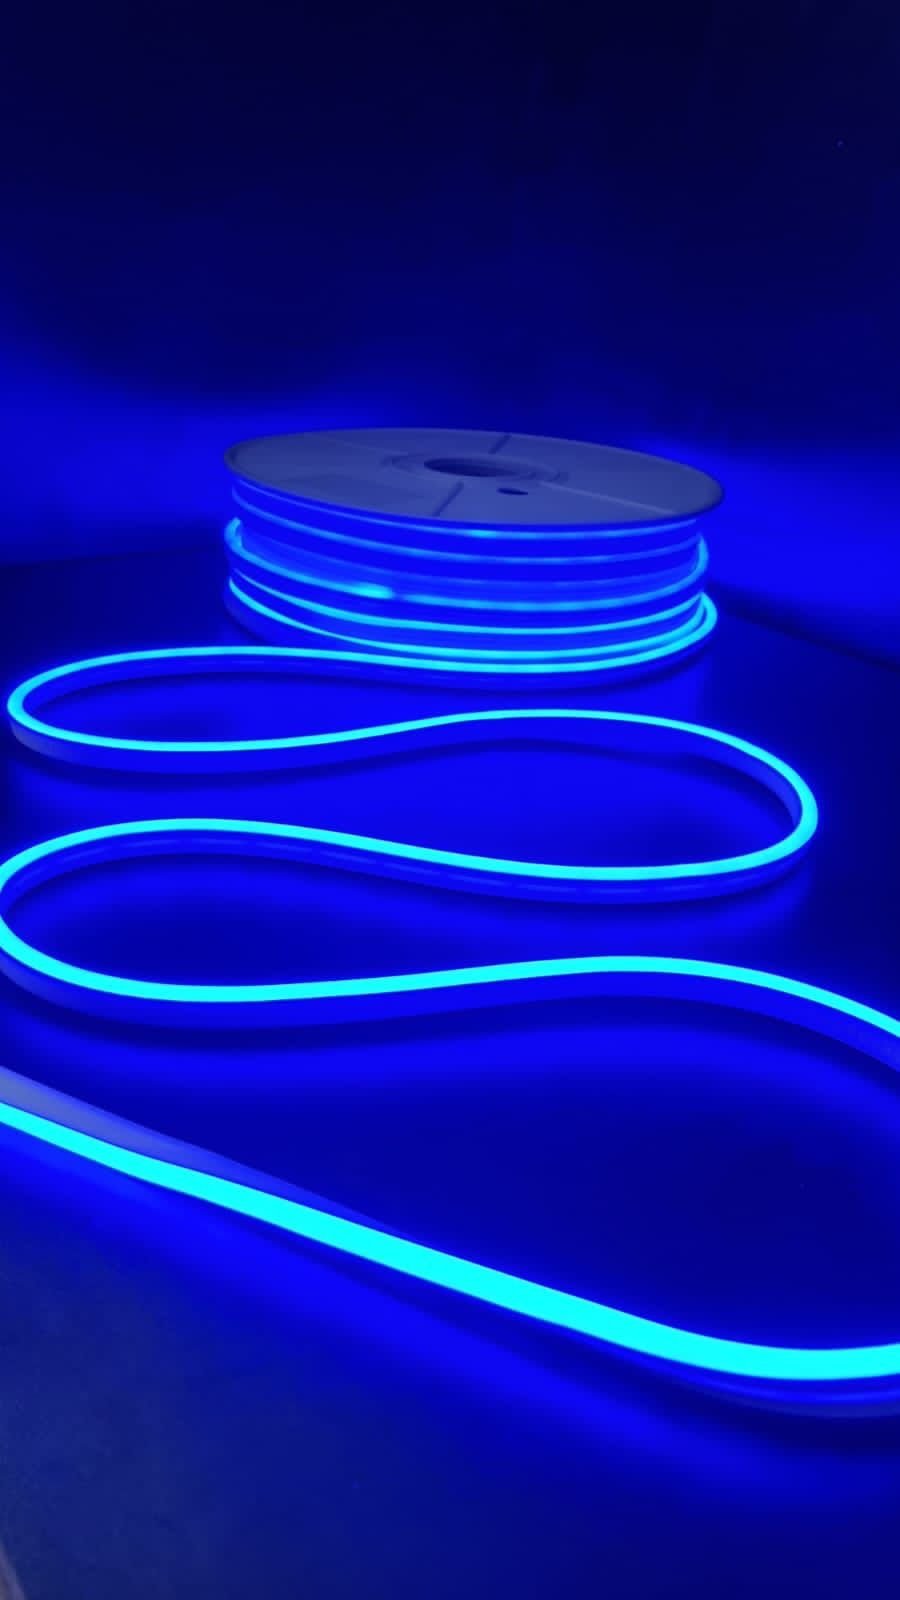 Mangueira Neon 12v - 5 metros - Painel Neon - Corte 2,5cm 6 x12mm - Cor: Azul - Bivolt - 1